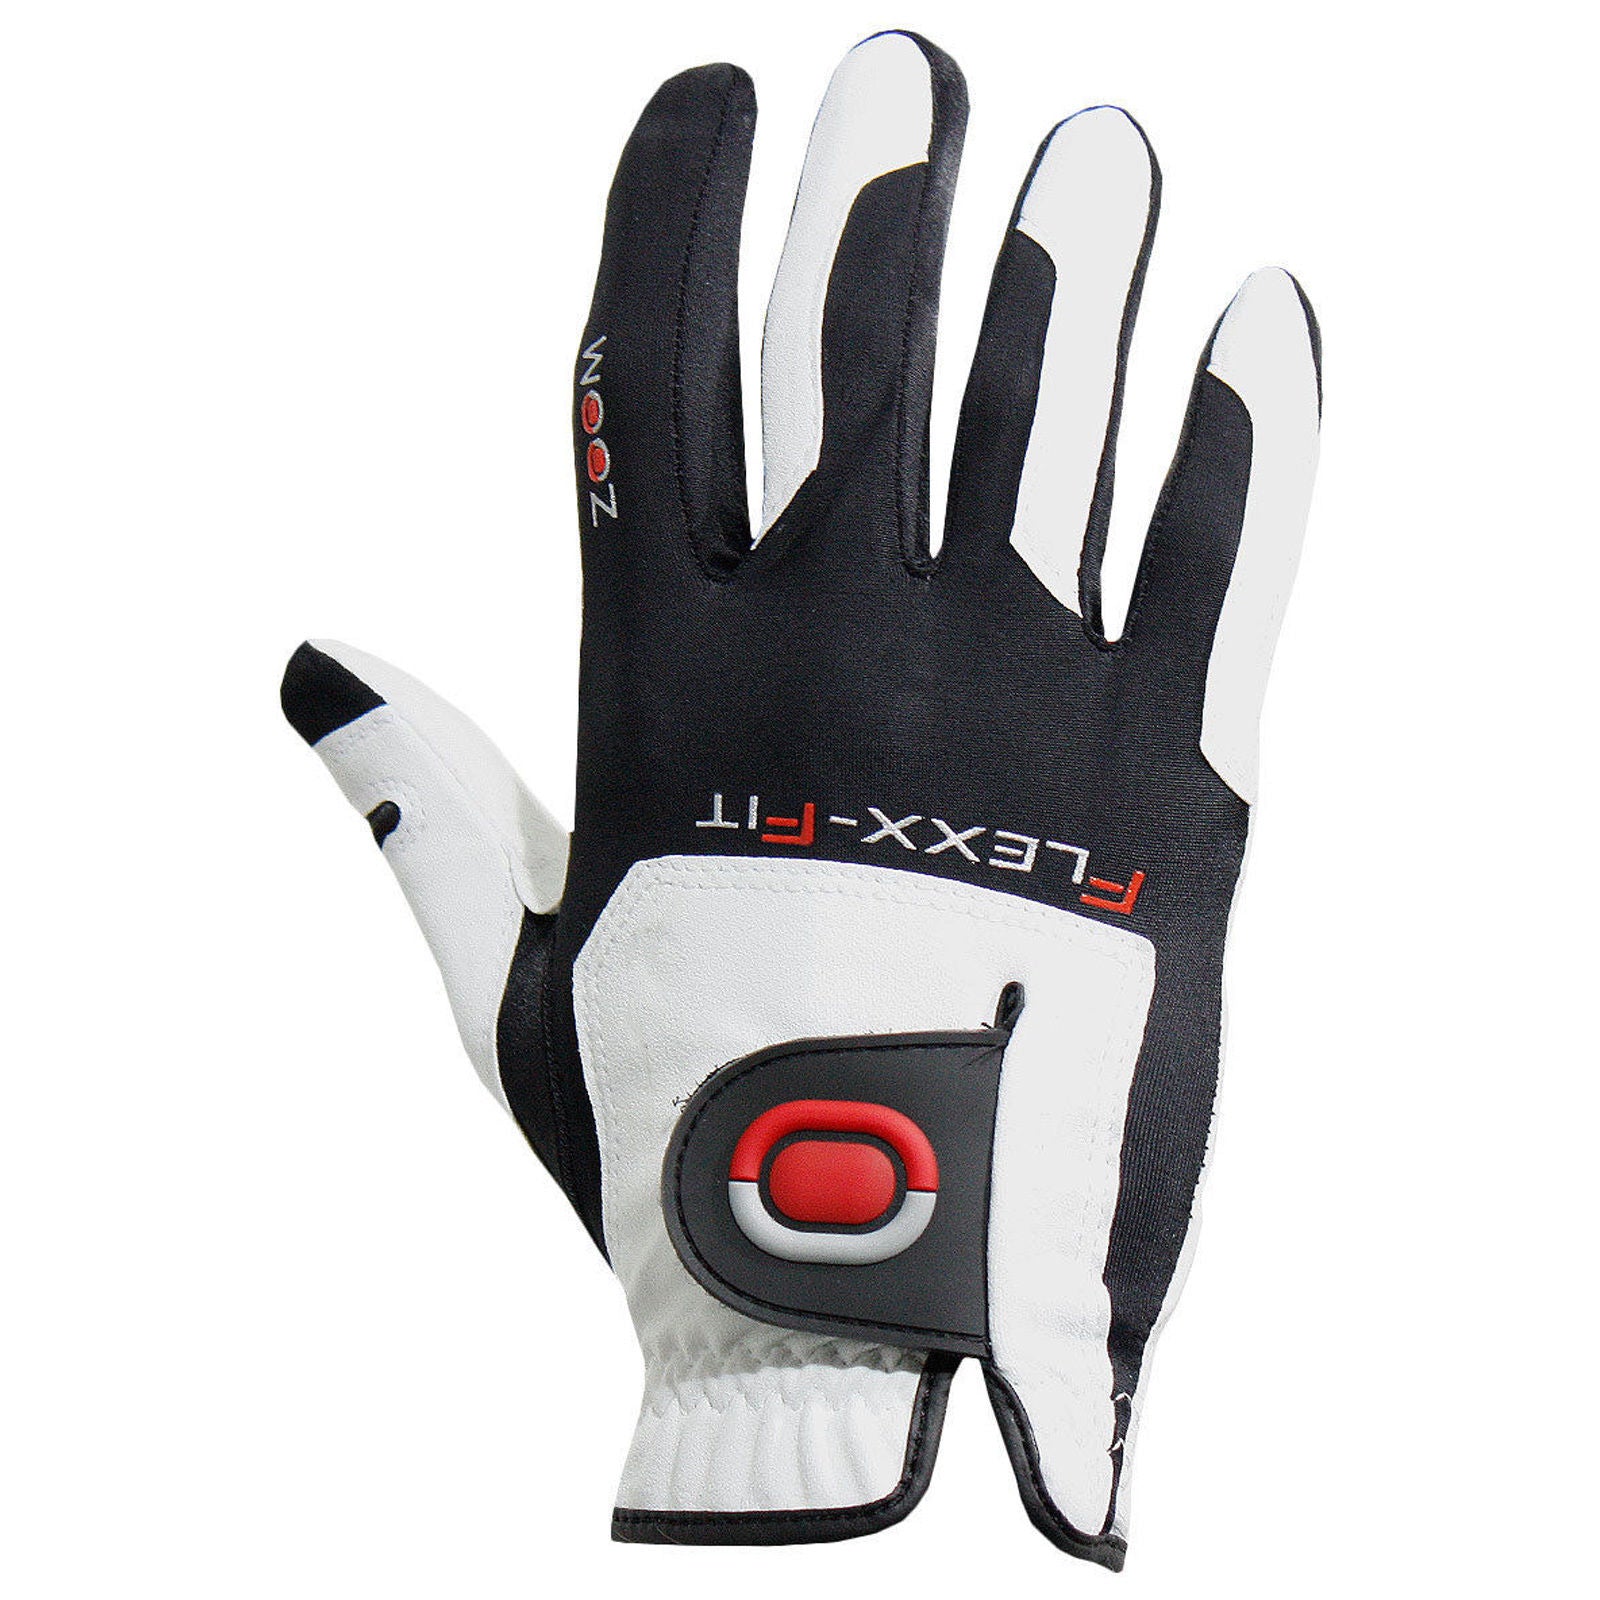 Zoom Mens Flexx Fit Right Hand TOUR Golf Glove - One Size